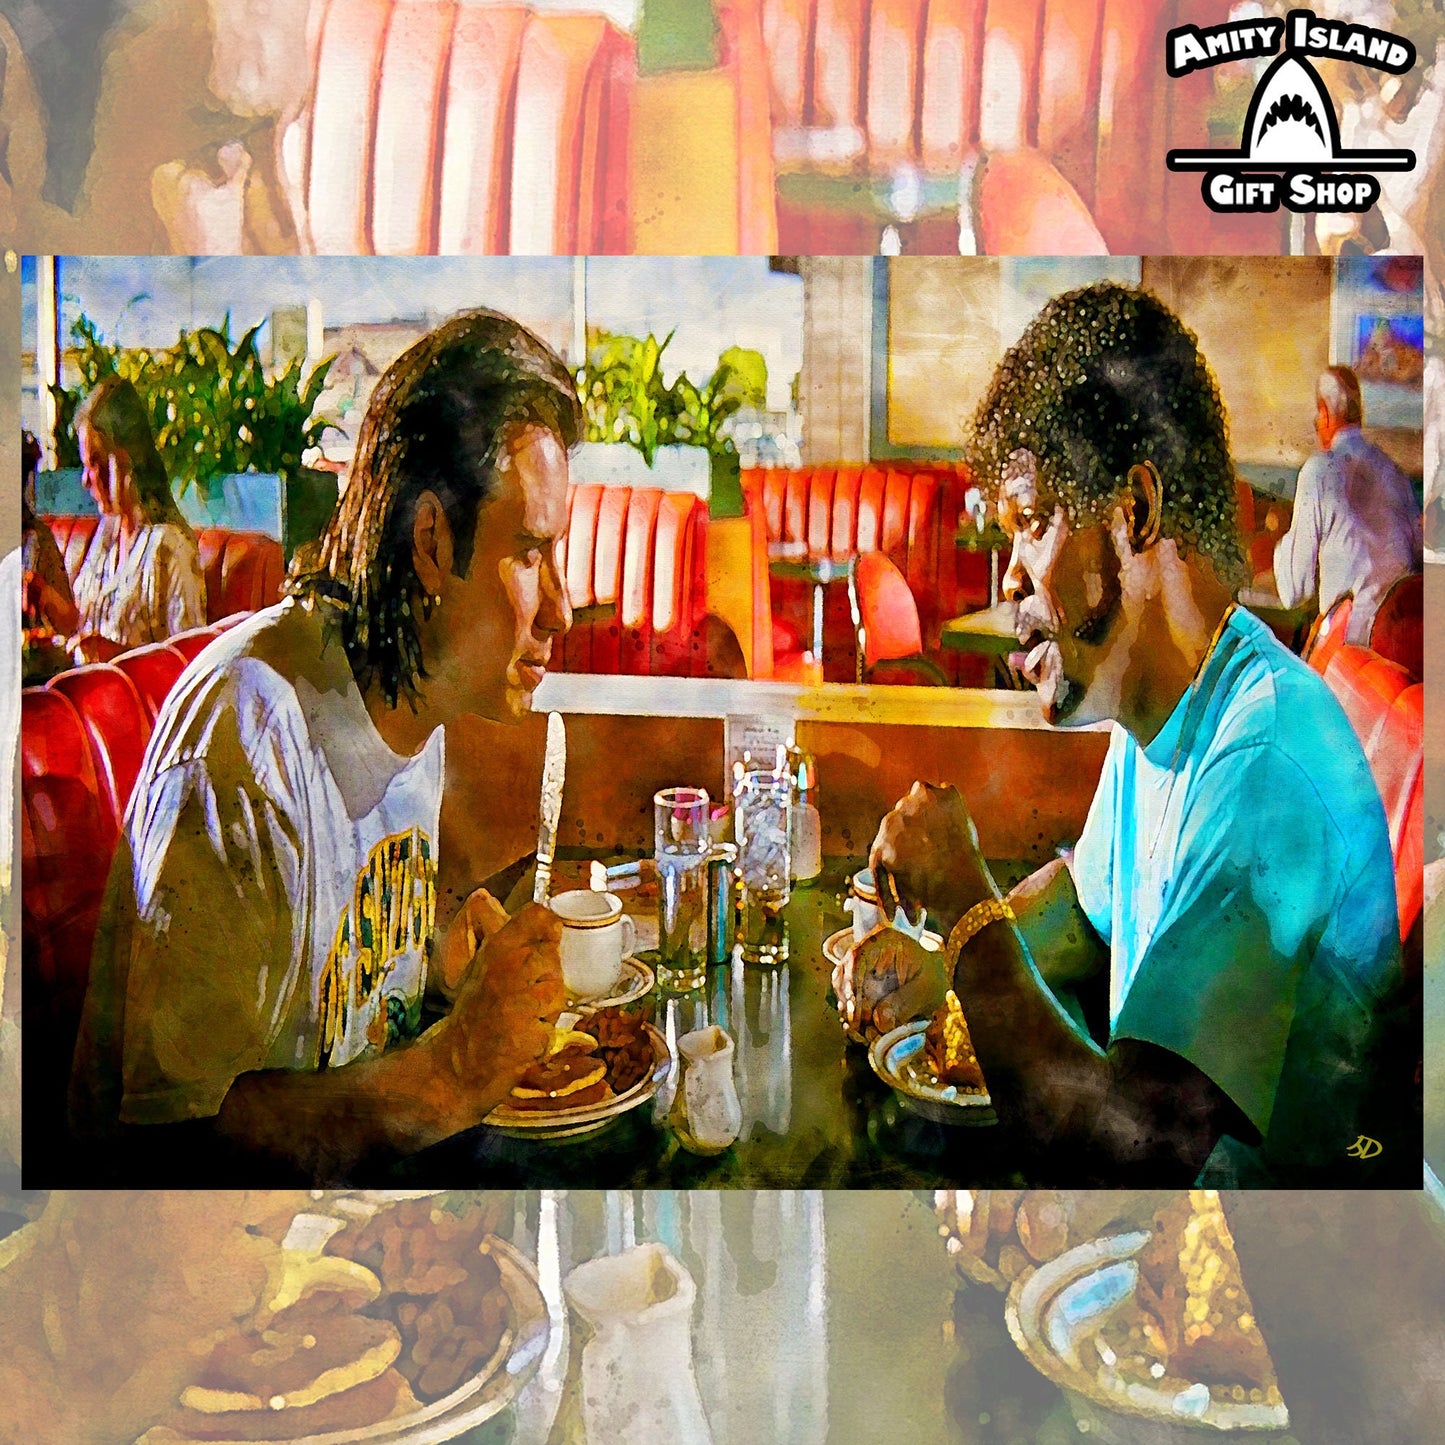 Want Any Bacon? - Pulp Fiction Inspired Artwork - Diner Scene - Tarantino Art Print - Vince and Jules